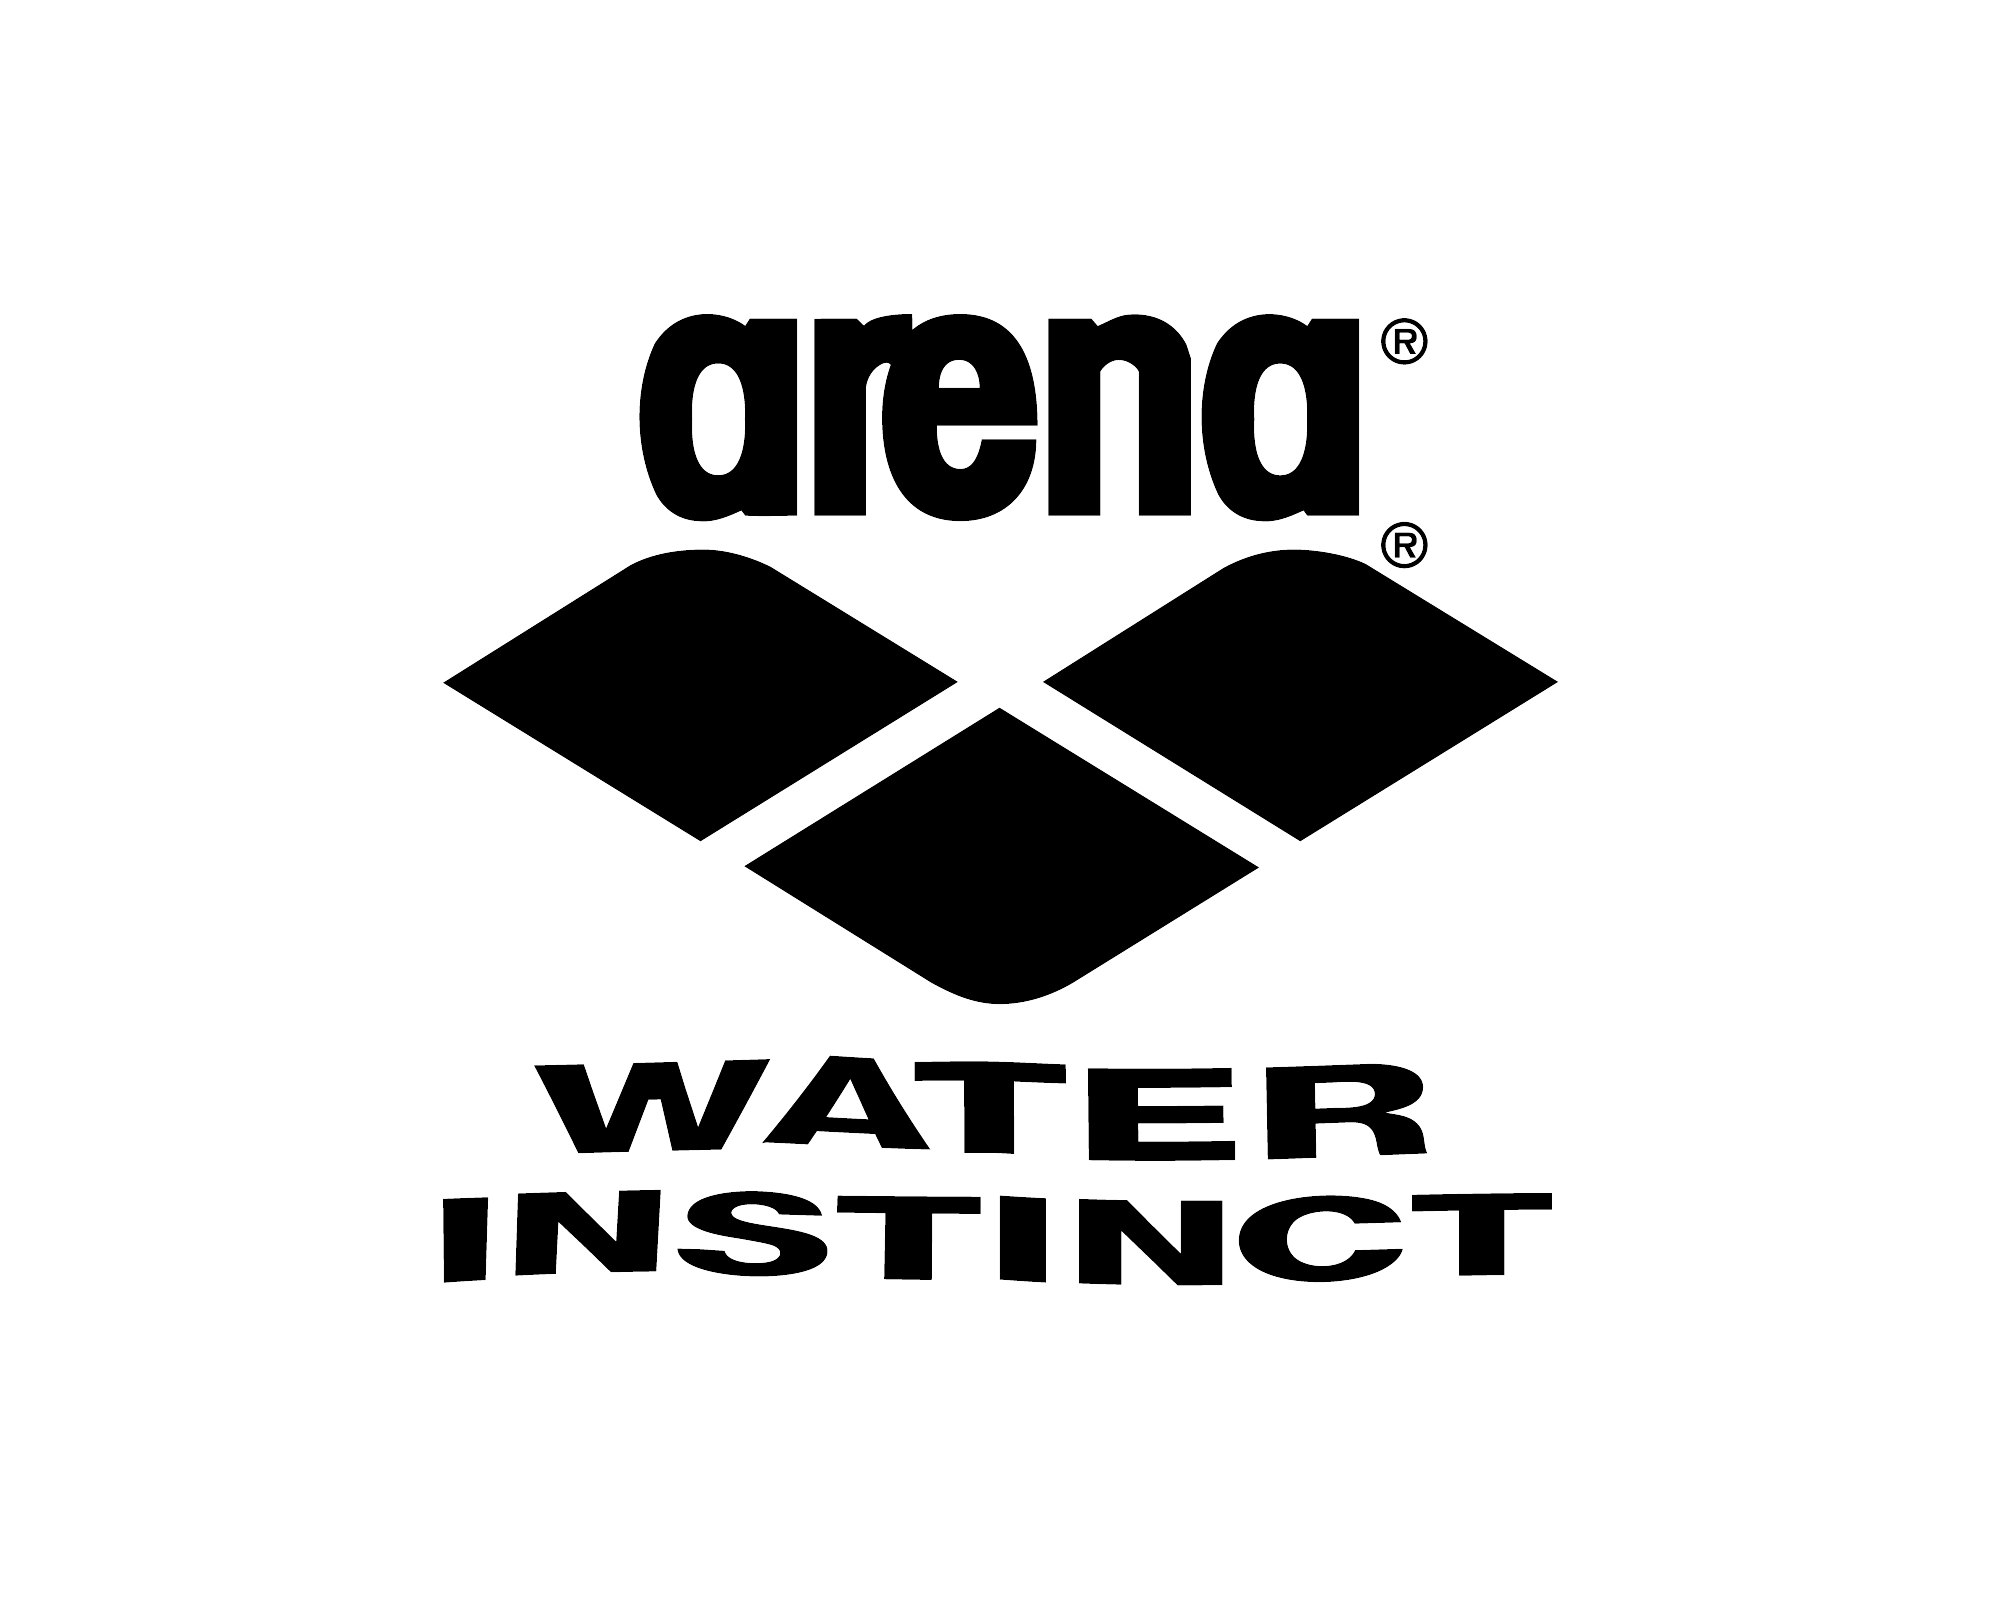 Arena Logo - Arena logo and slogan Water Instinct